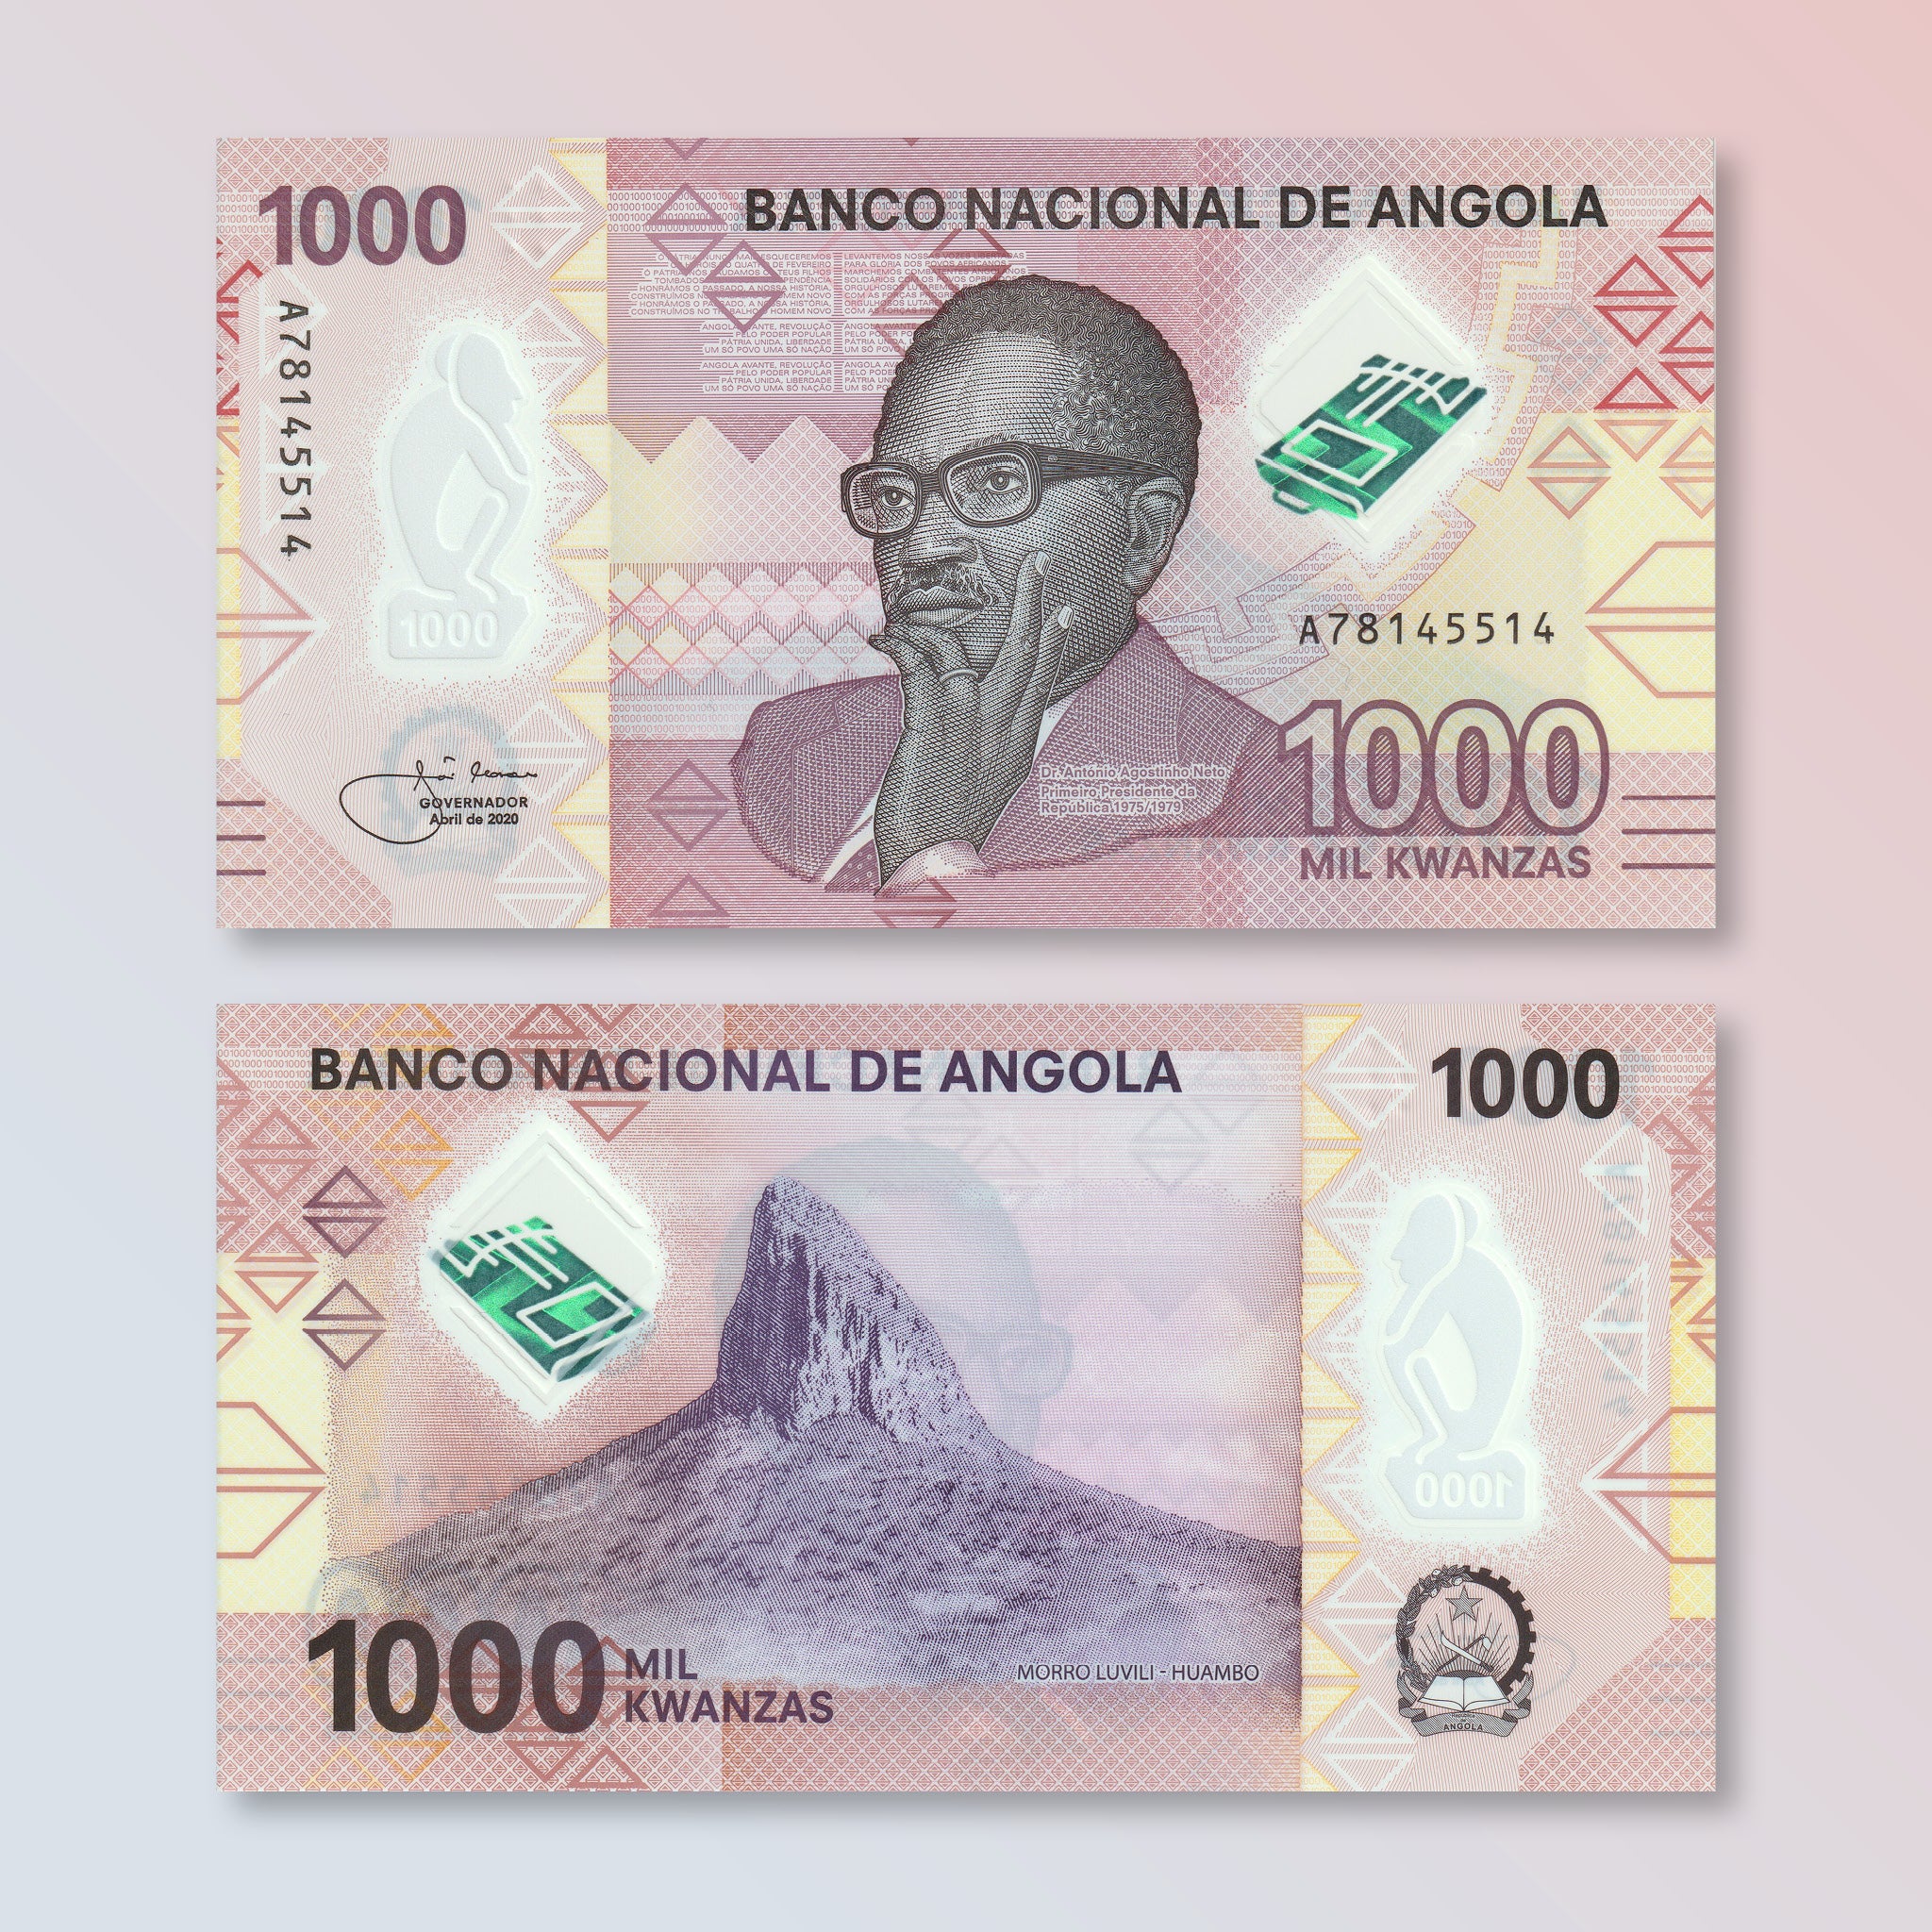 Angola 1000 Kwanzas, 2020, B559a, UNC - Robert's World Money - World Banknotes